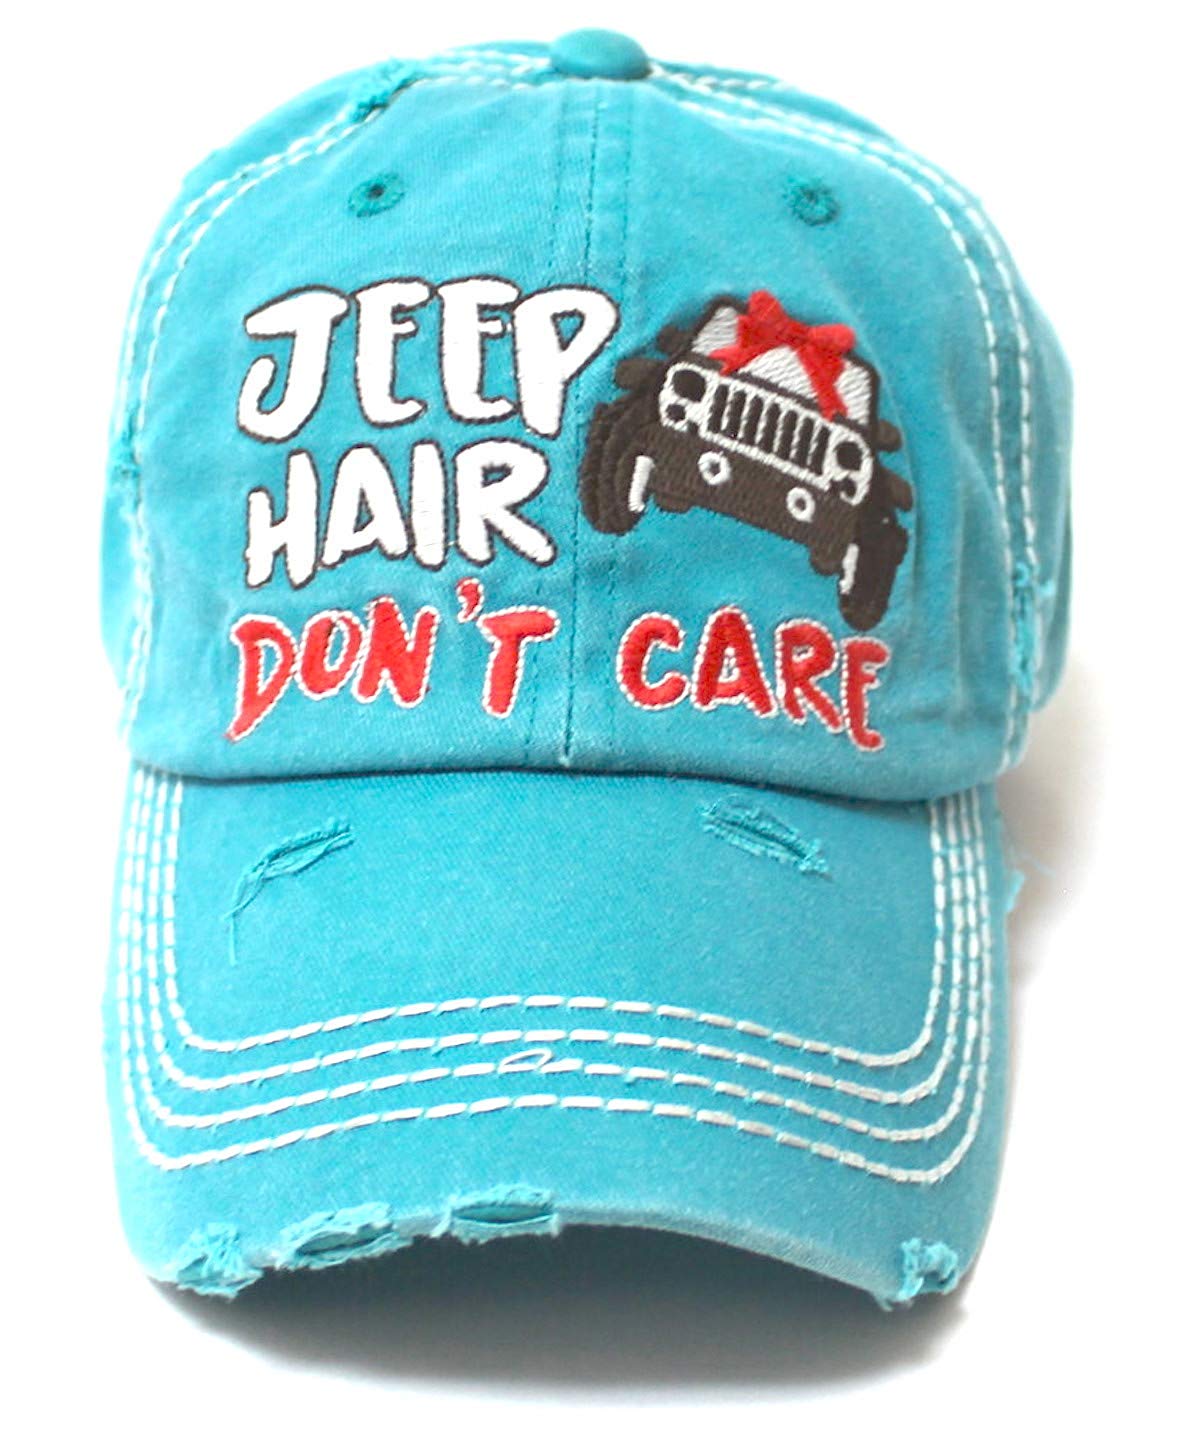 Ladies Bow-Tie Jeep Hair Don't Care Monogram Cheer Baseball Hat, Turquoise Blue - Caps 'N Vintage 